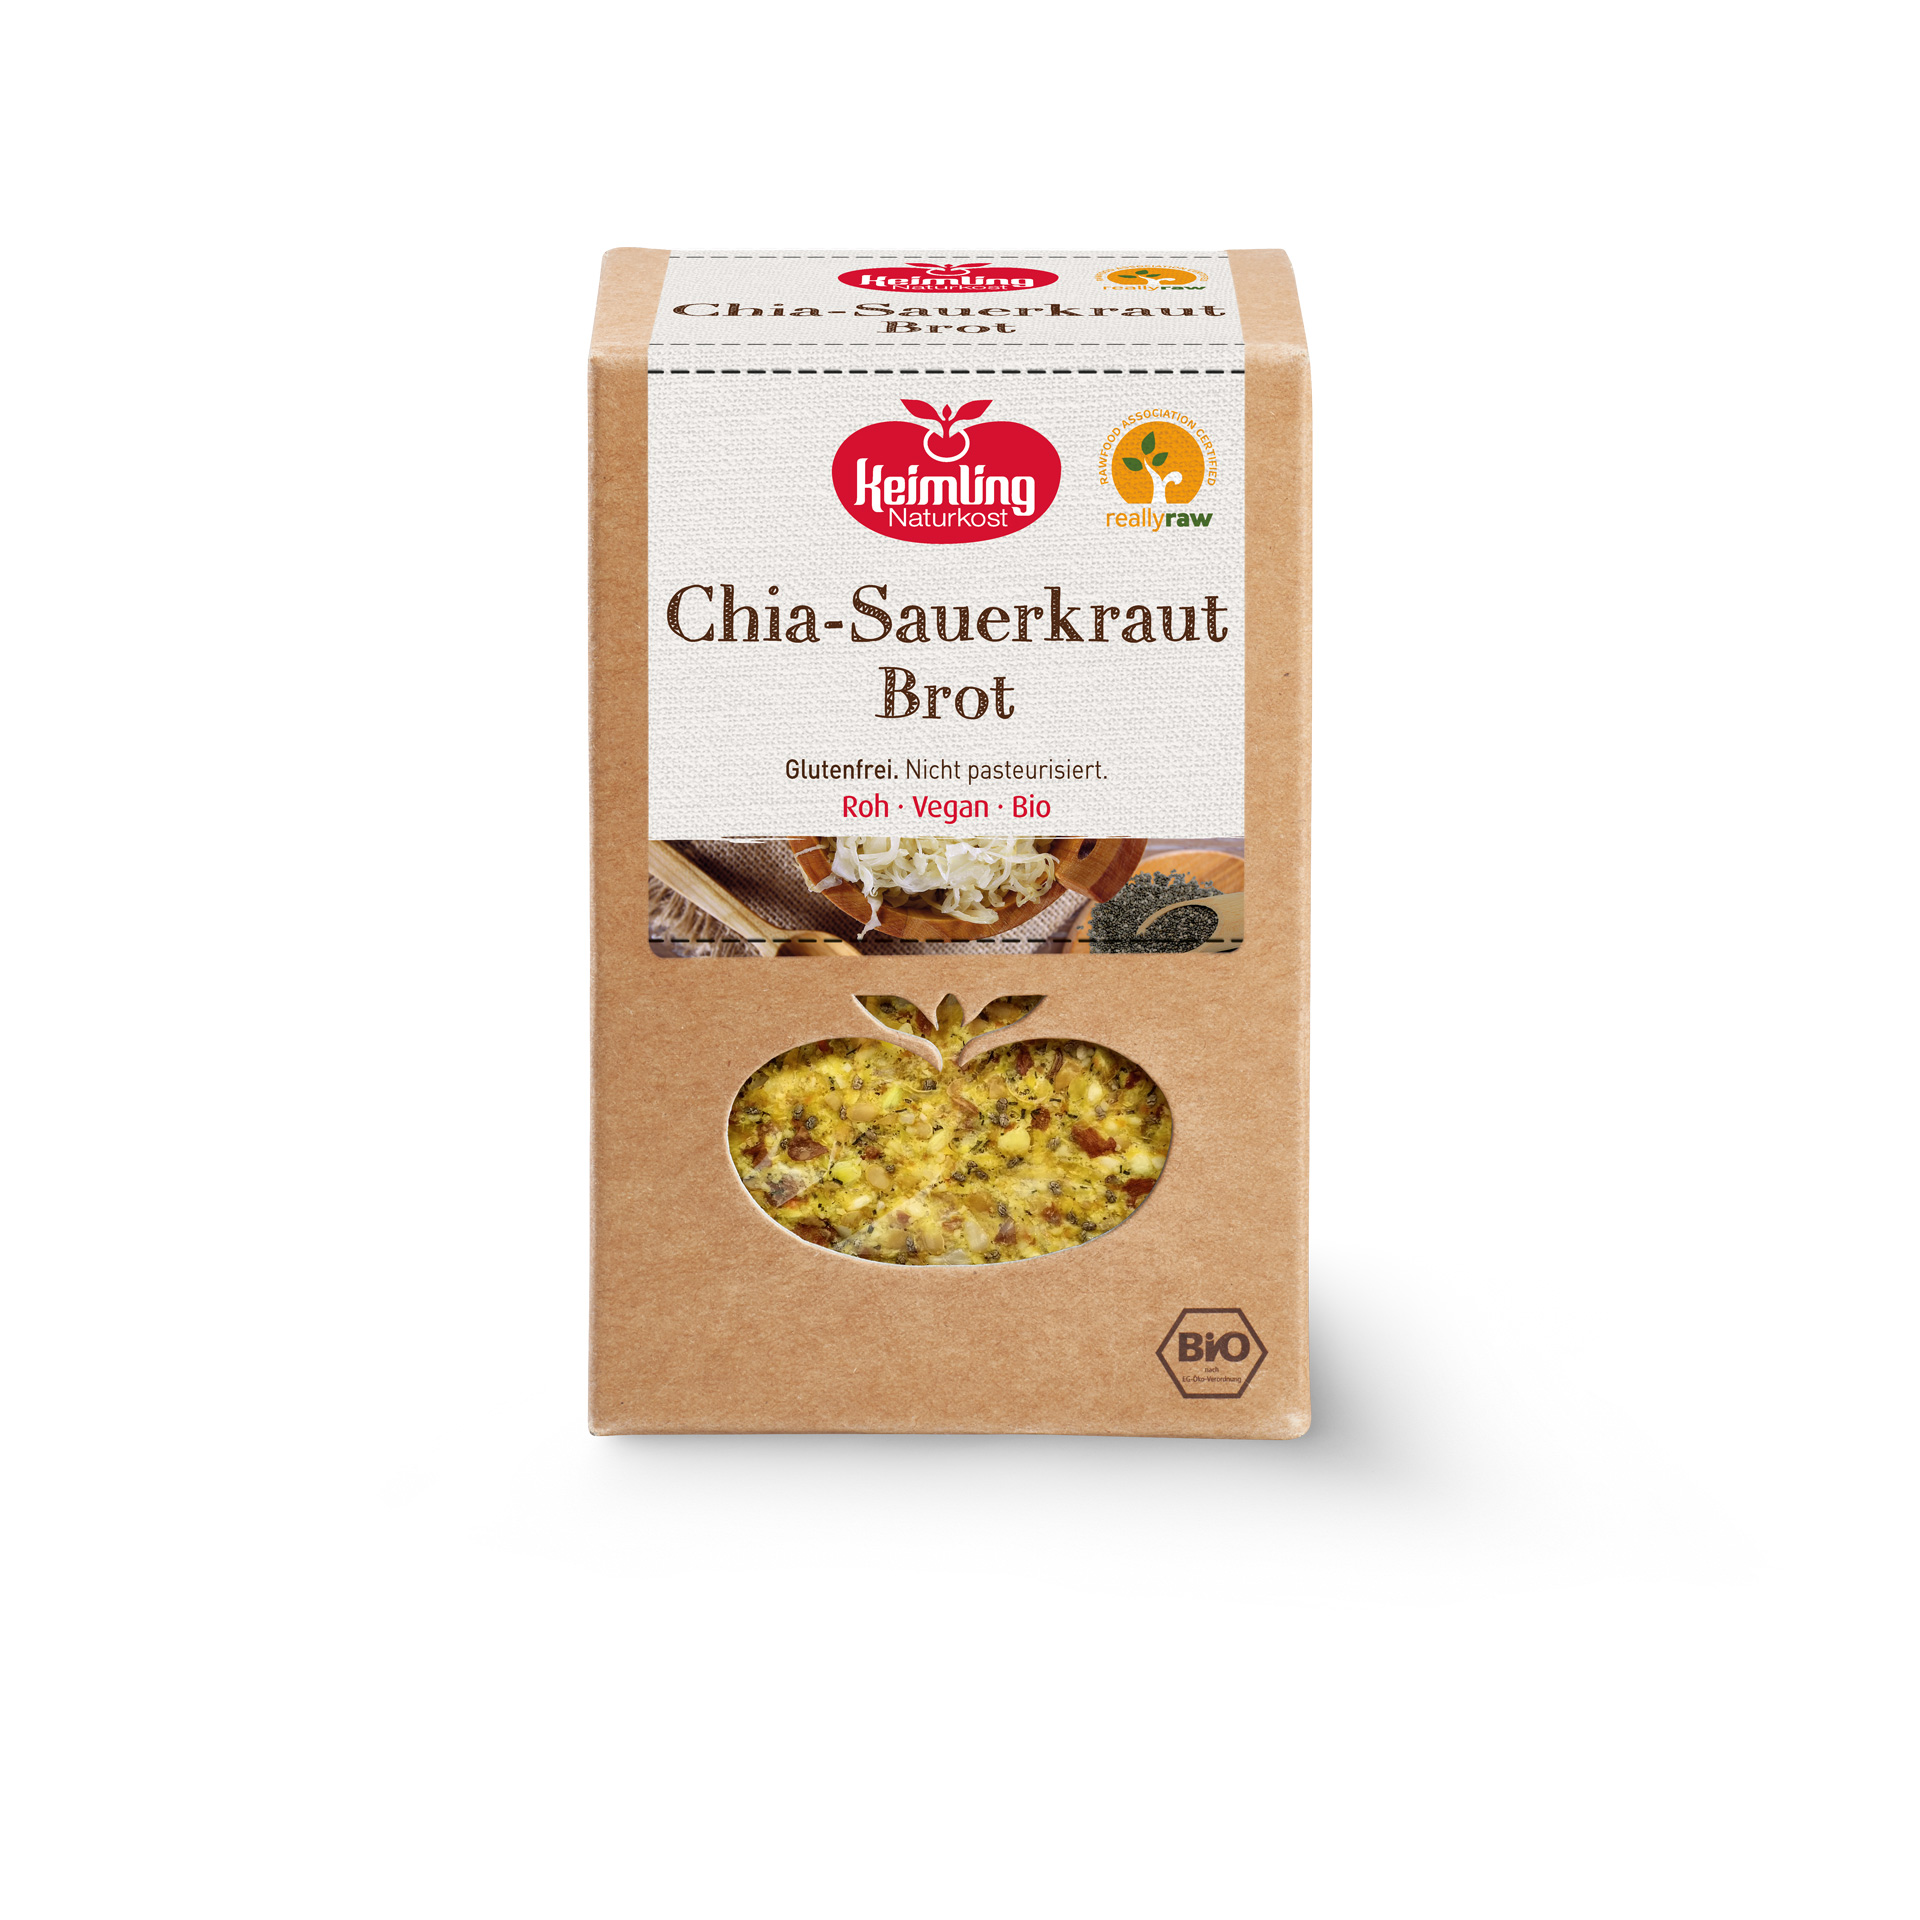 Chia-Sauerkraut Brot von Keimling Naturkost, really-raw zertifiziert